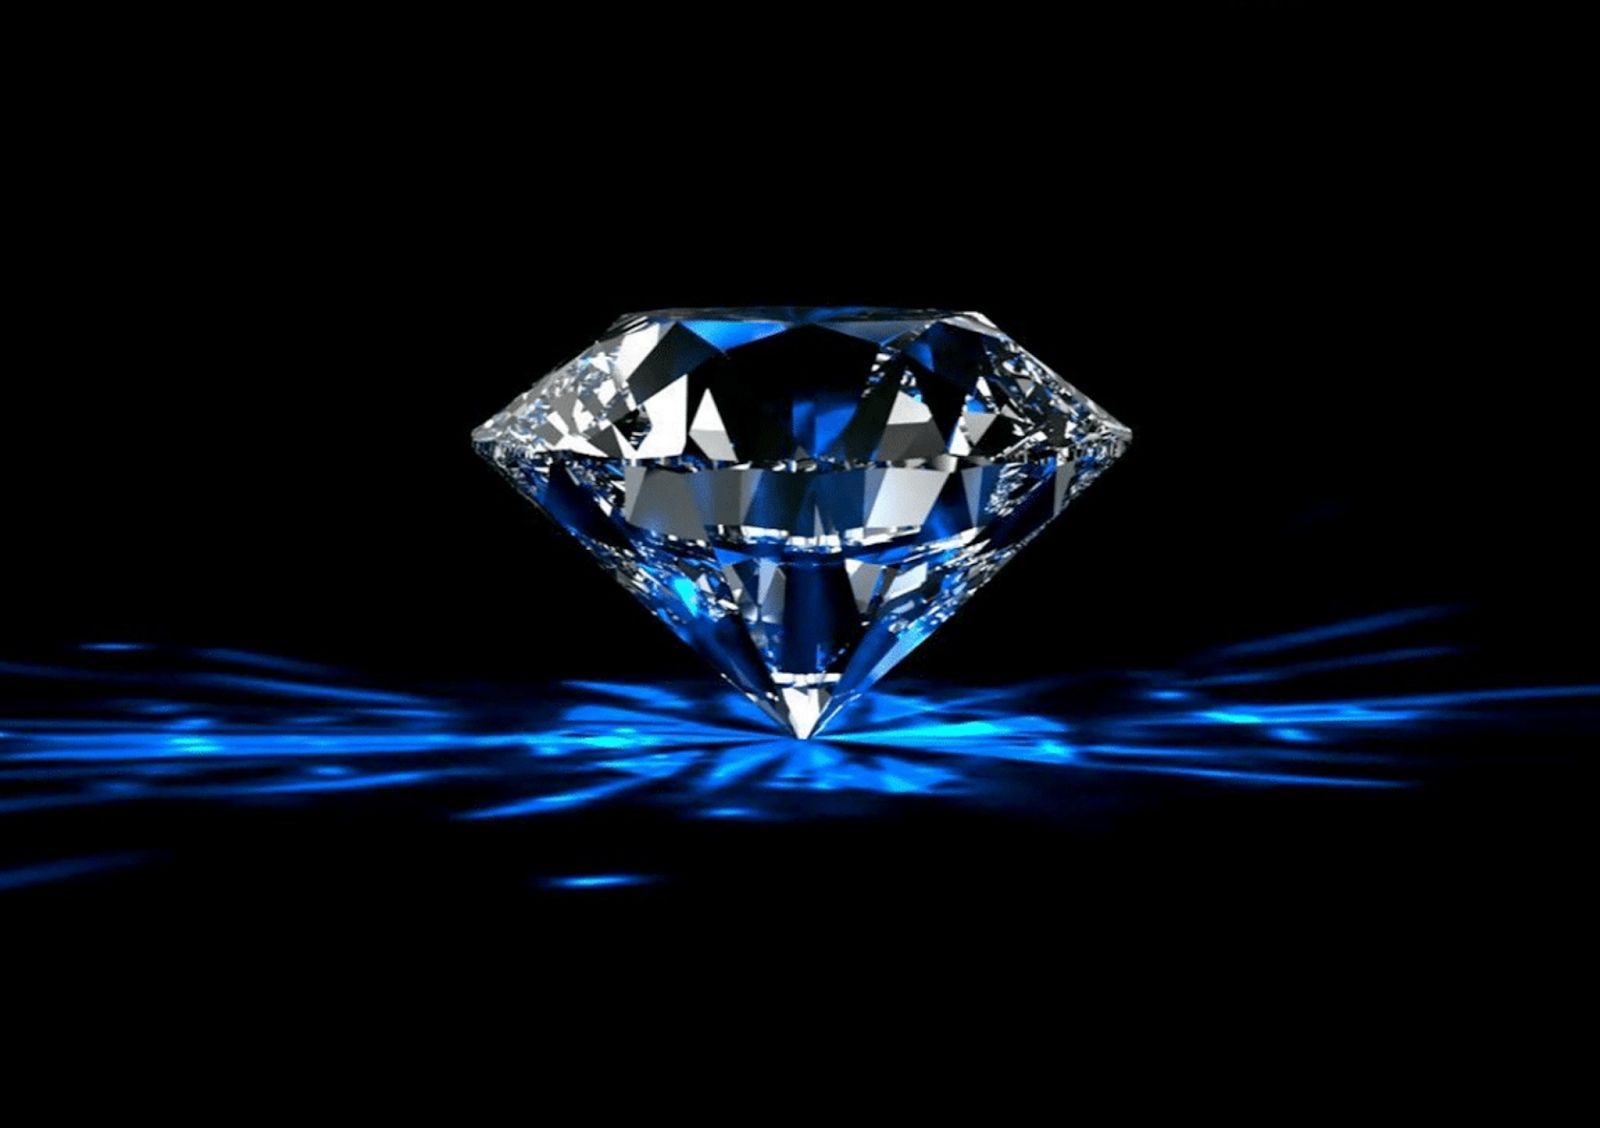 A diamond with blue light shining on it - Diamond